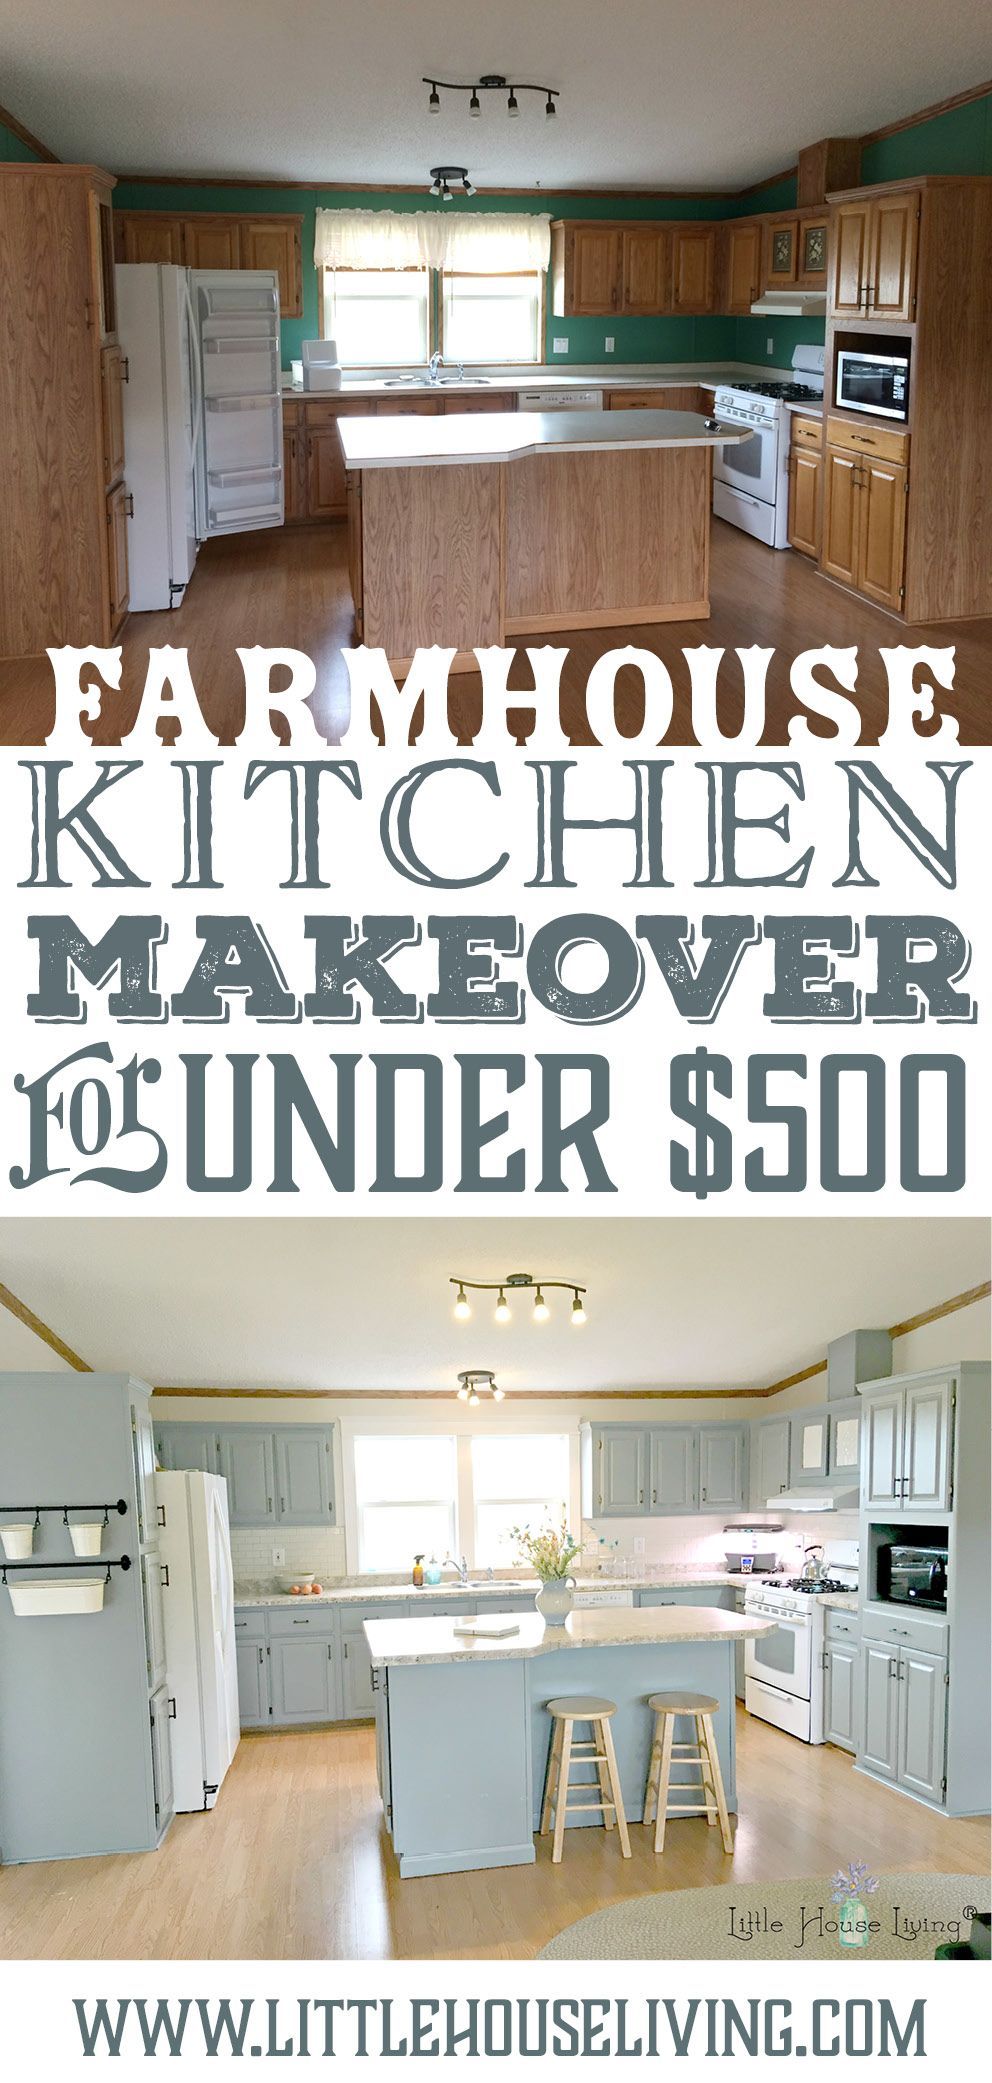 Farmhouse Style Kitchen Makeover for Under $500 - Farmhouse Style Kitchen Makeover for Under $500 -   19 diy House kitchen ideas